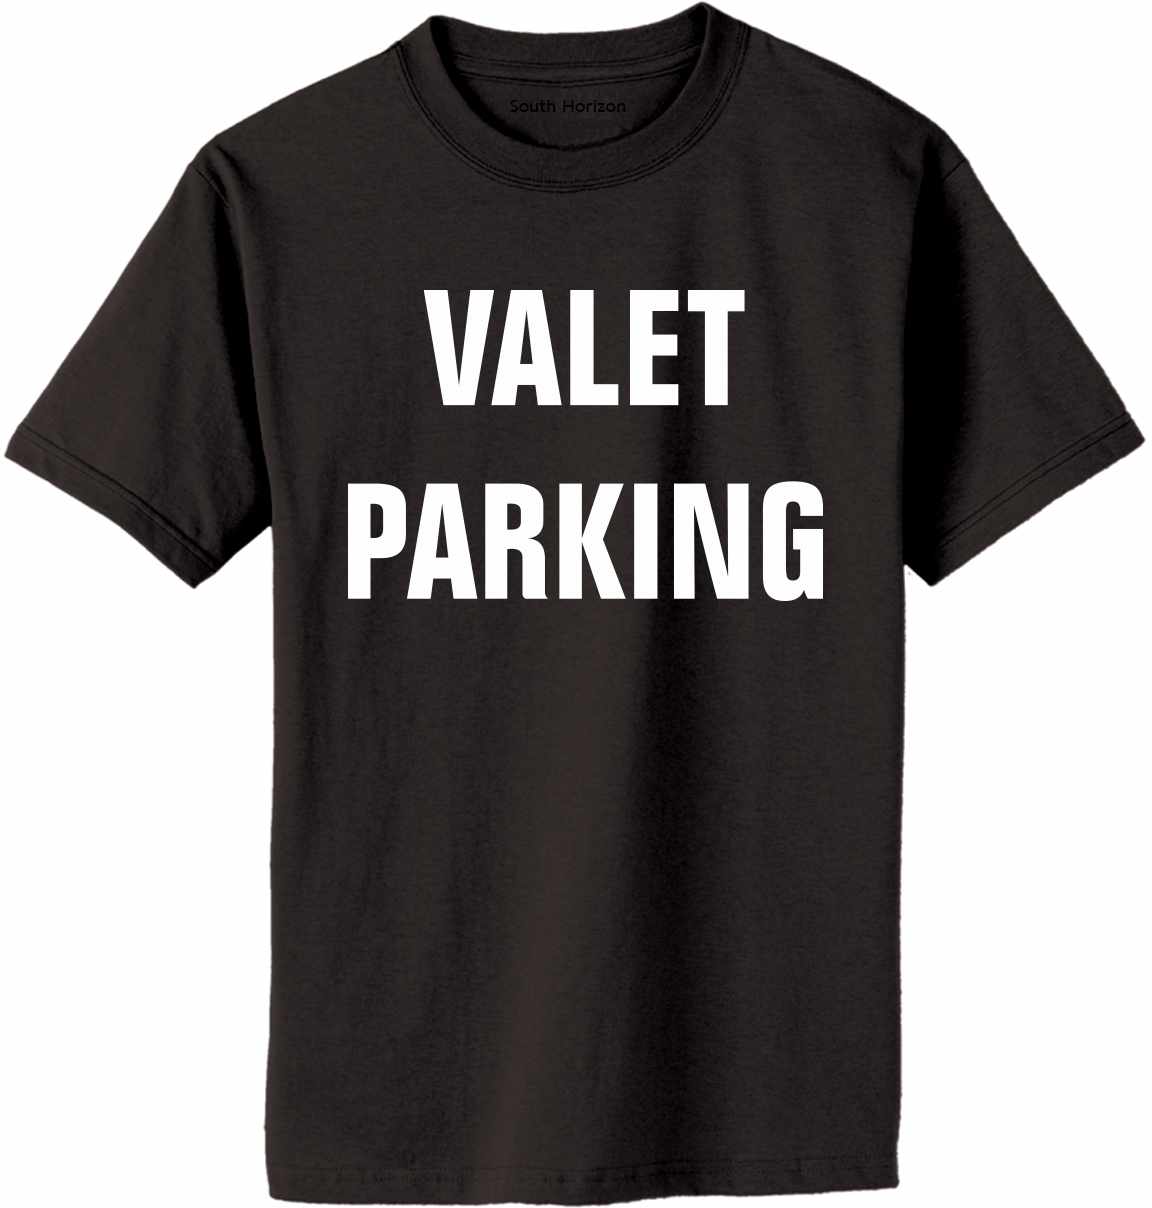 VALET PARKING Adult T-Shirt